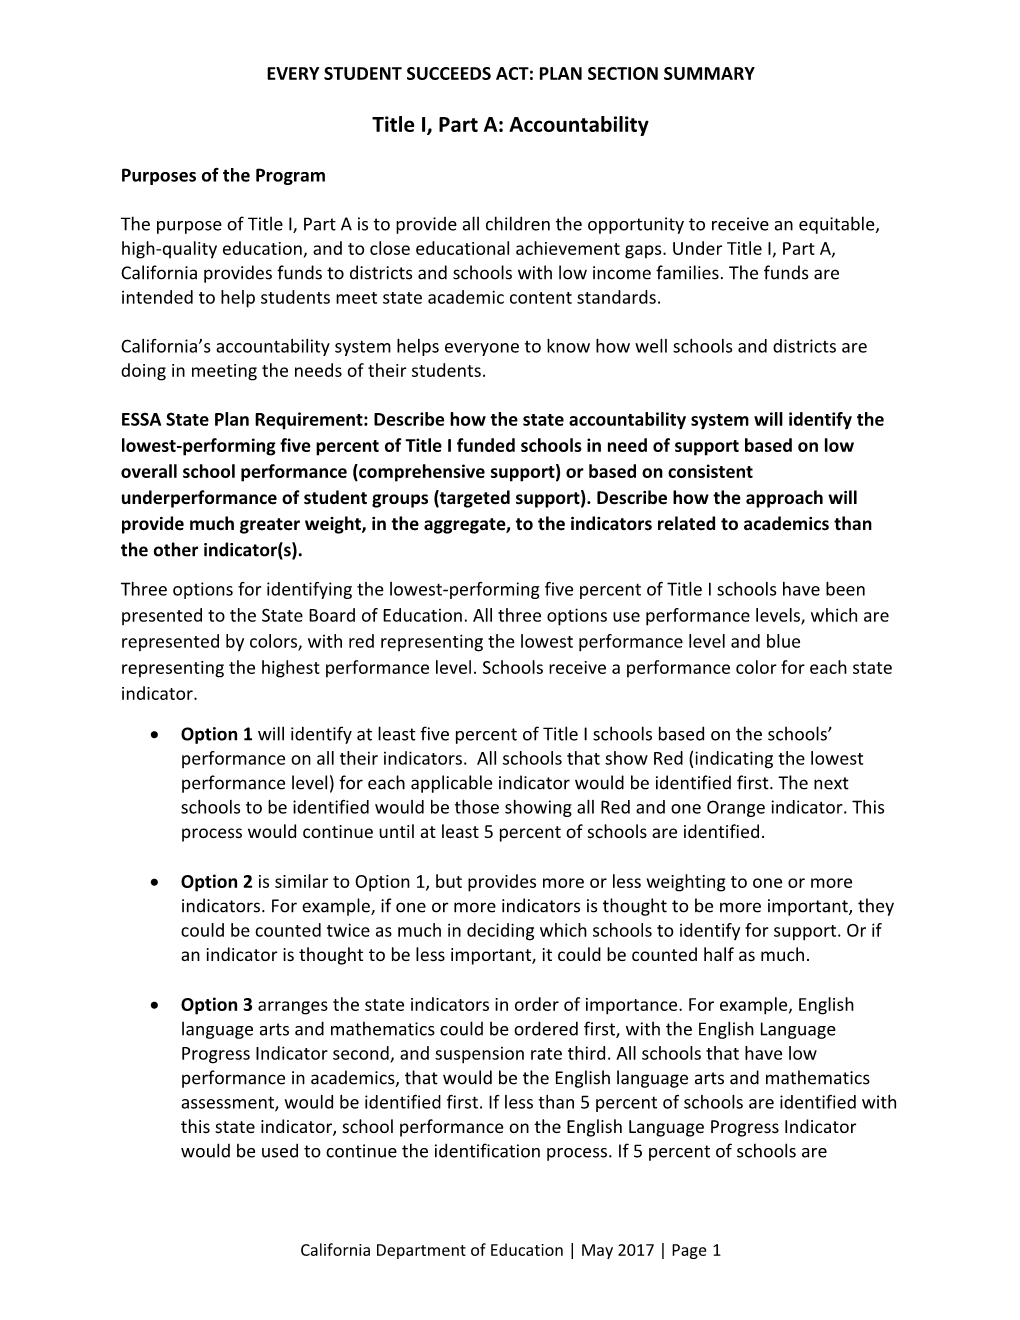 Accountability Draft Section Summary - ESSA (CA Dept of Education)